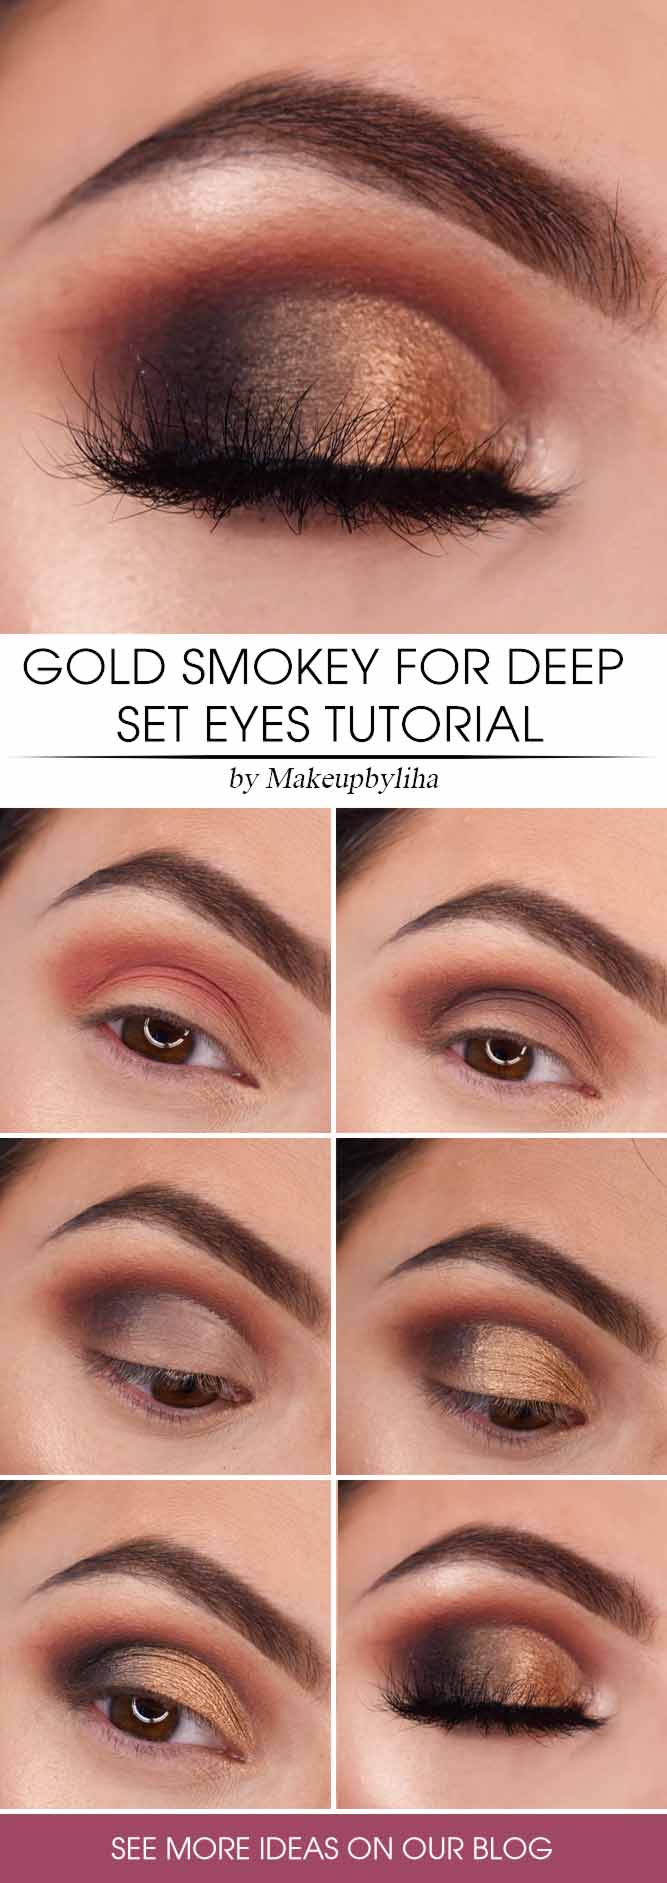 Gold Smokey Eyes Tutorial #smokey #tutorial